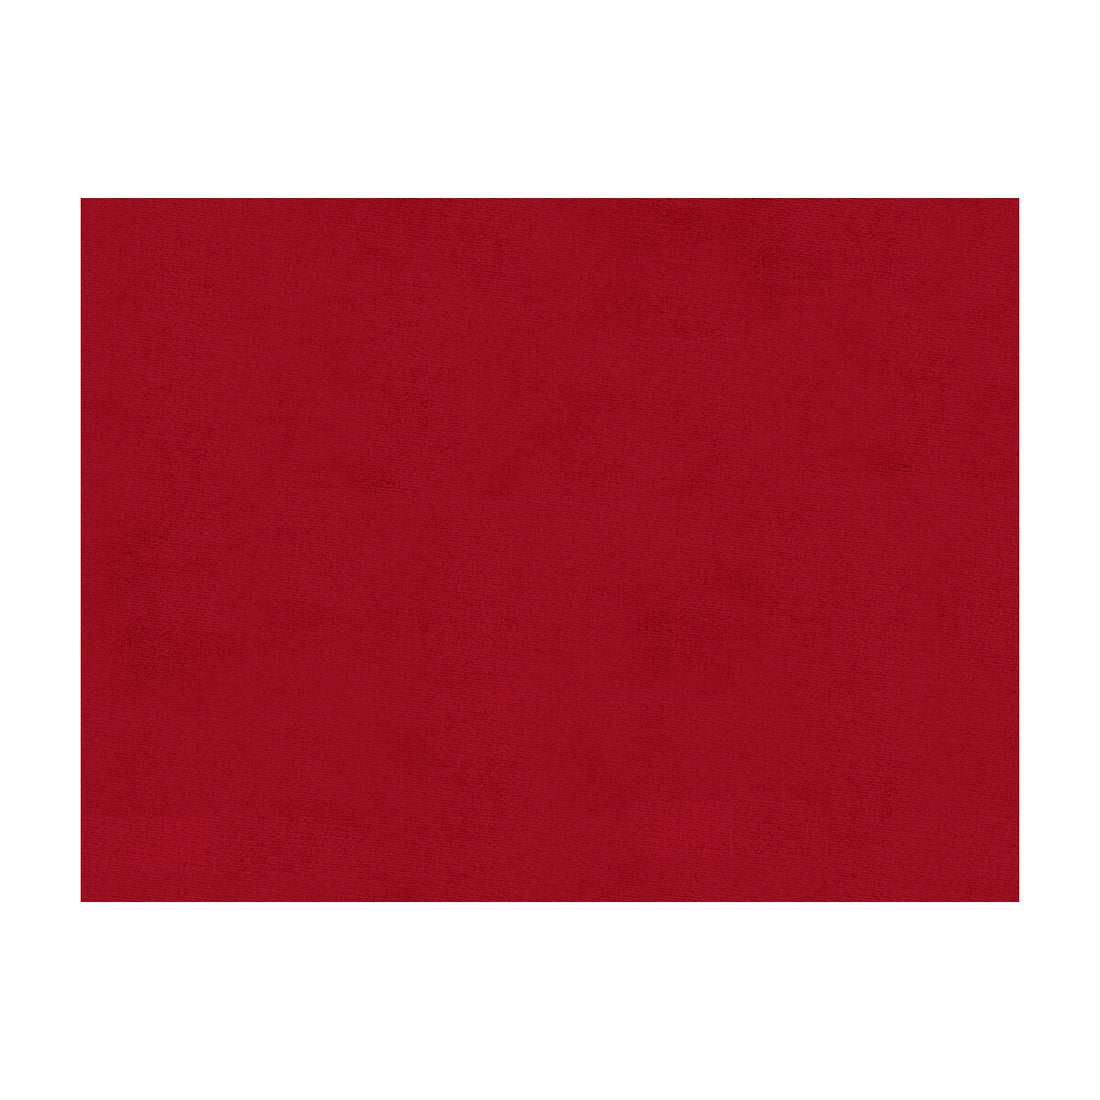 Windsor fabric in crimson color - pattern NF-WINDSOR.46.0 - by Lee Jofa